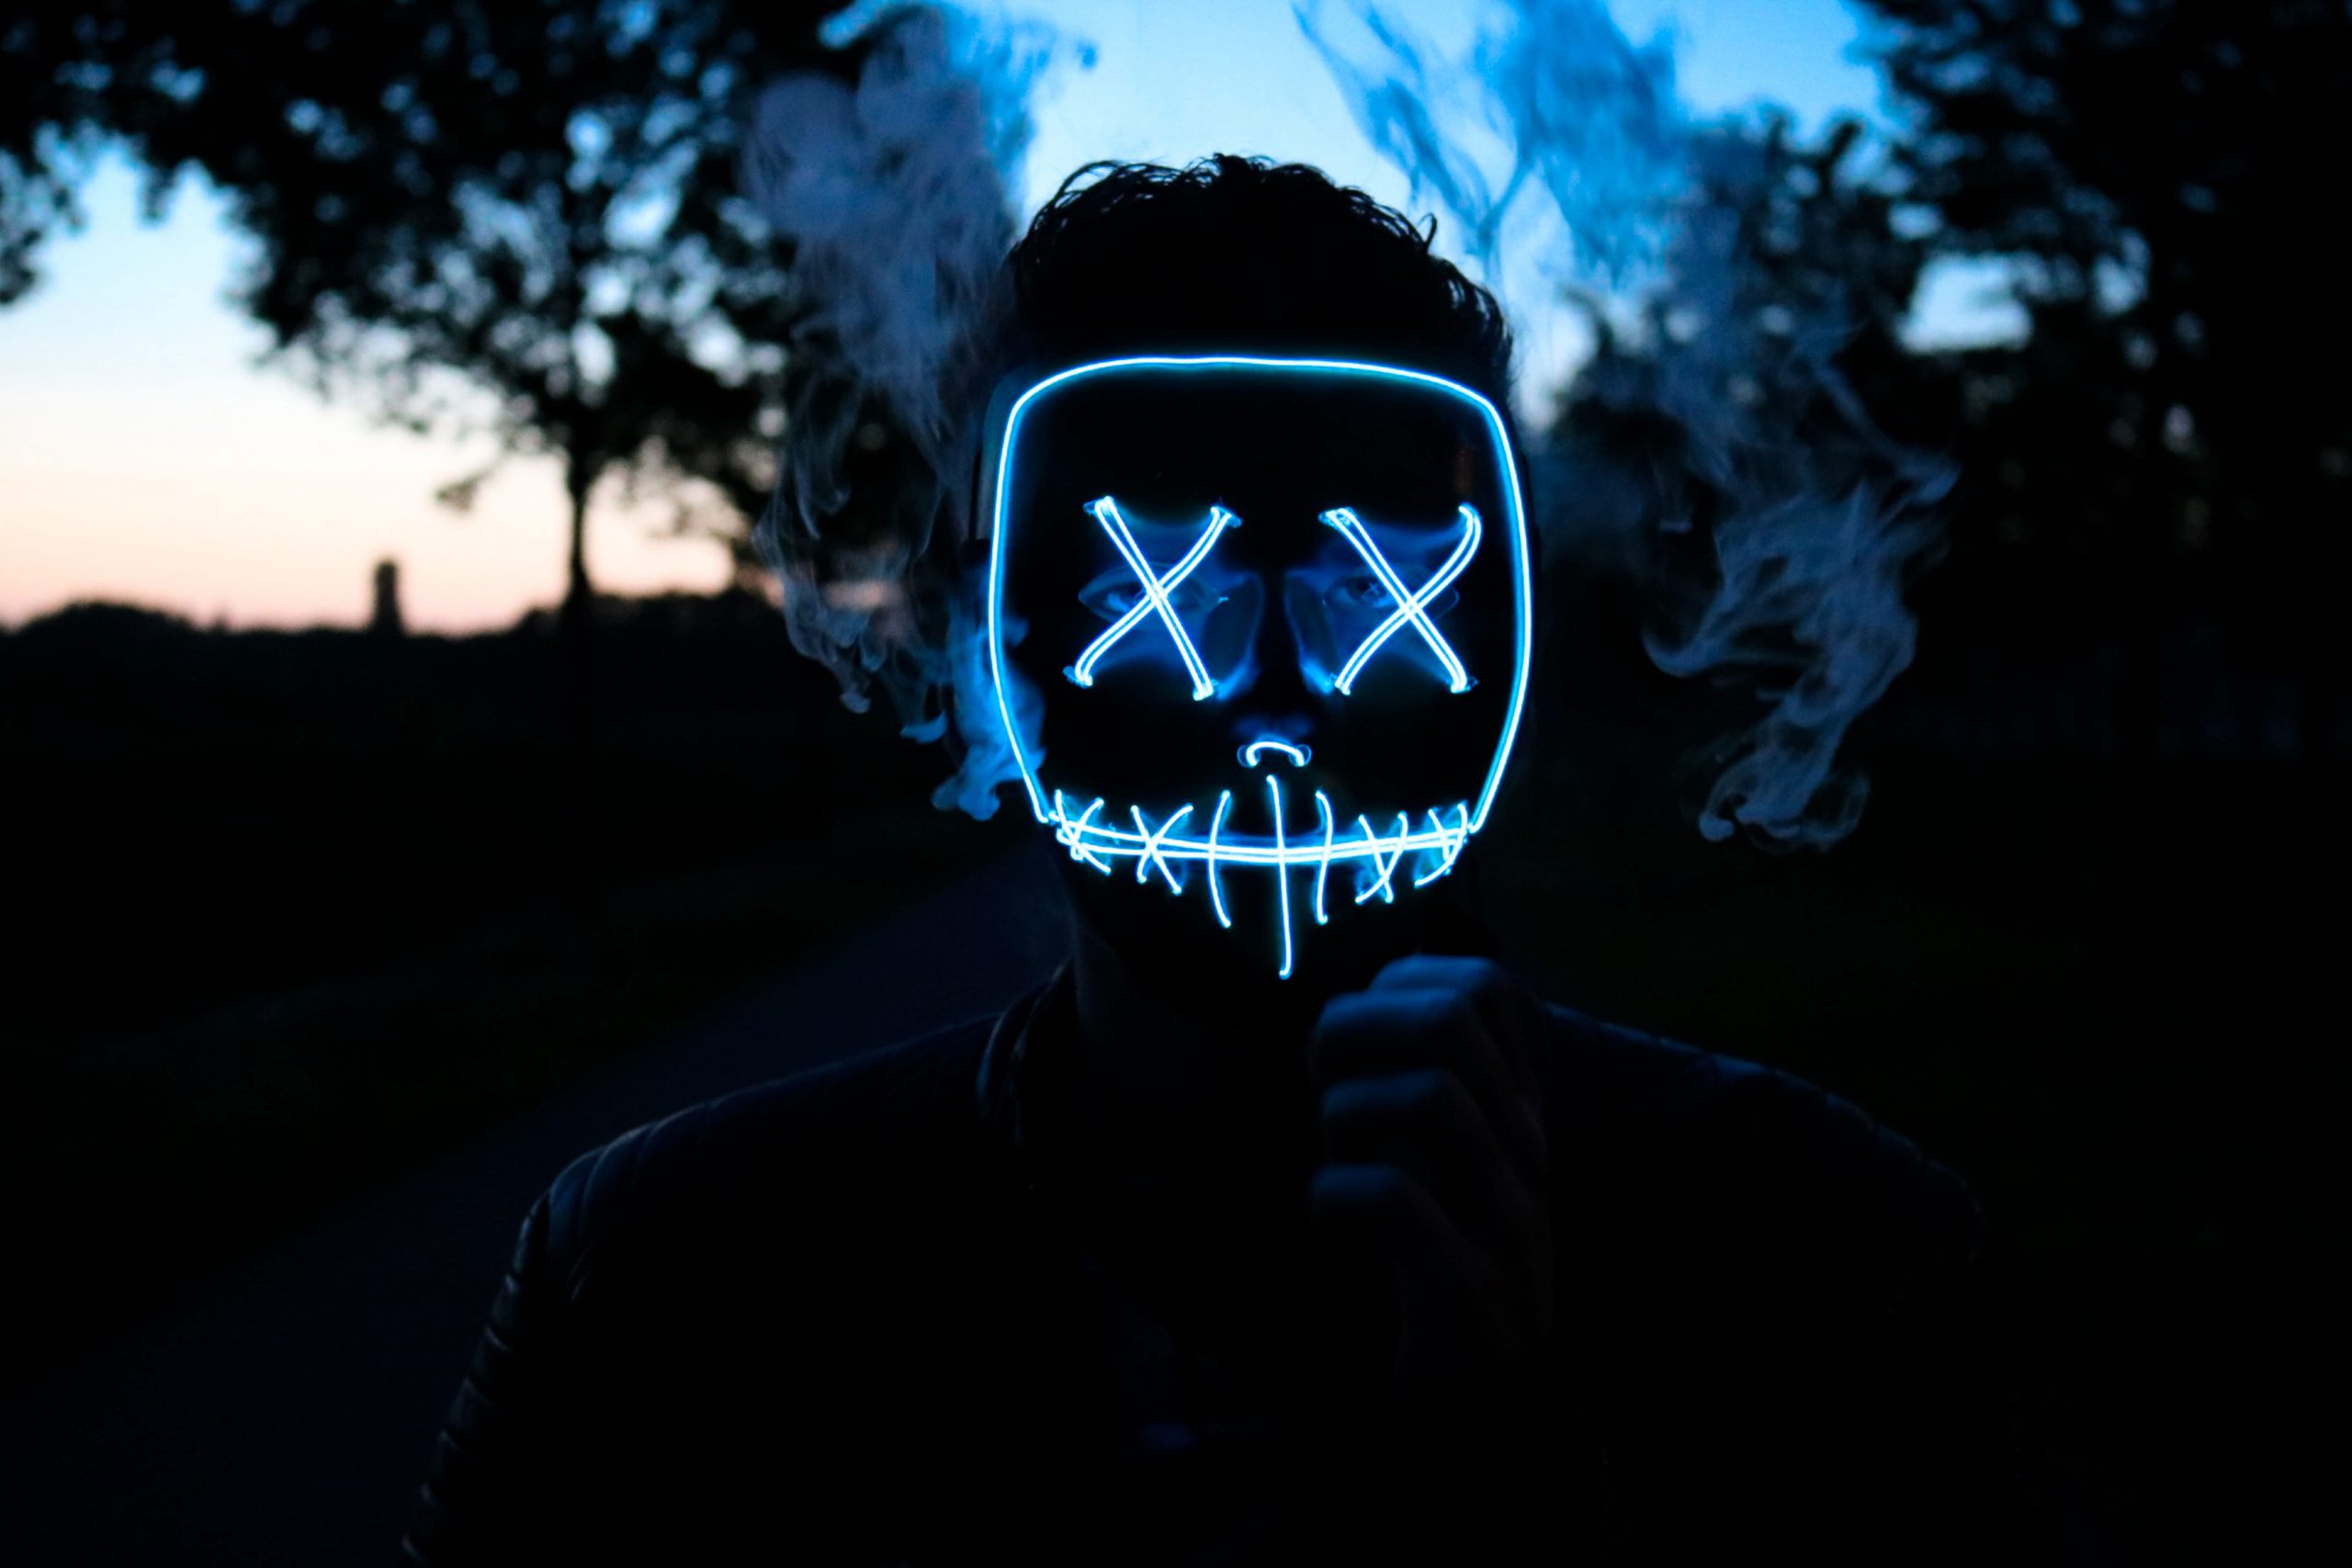 Wallpaper Man Wearing Led Mask, Neon Light Mask On Person